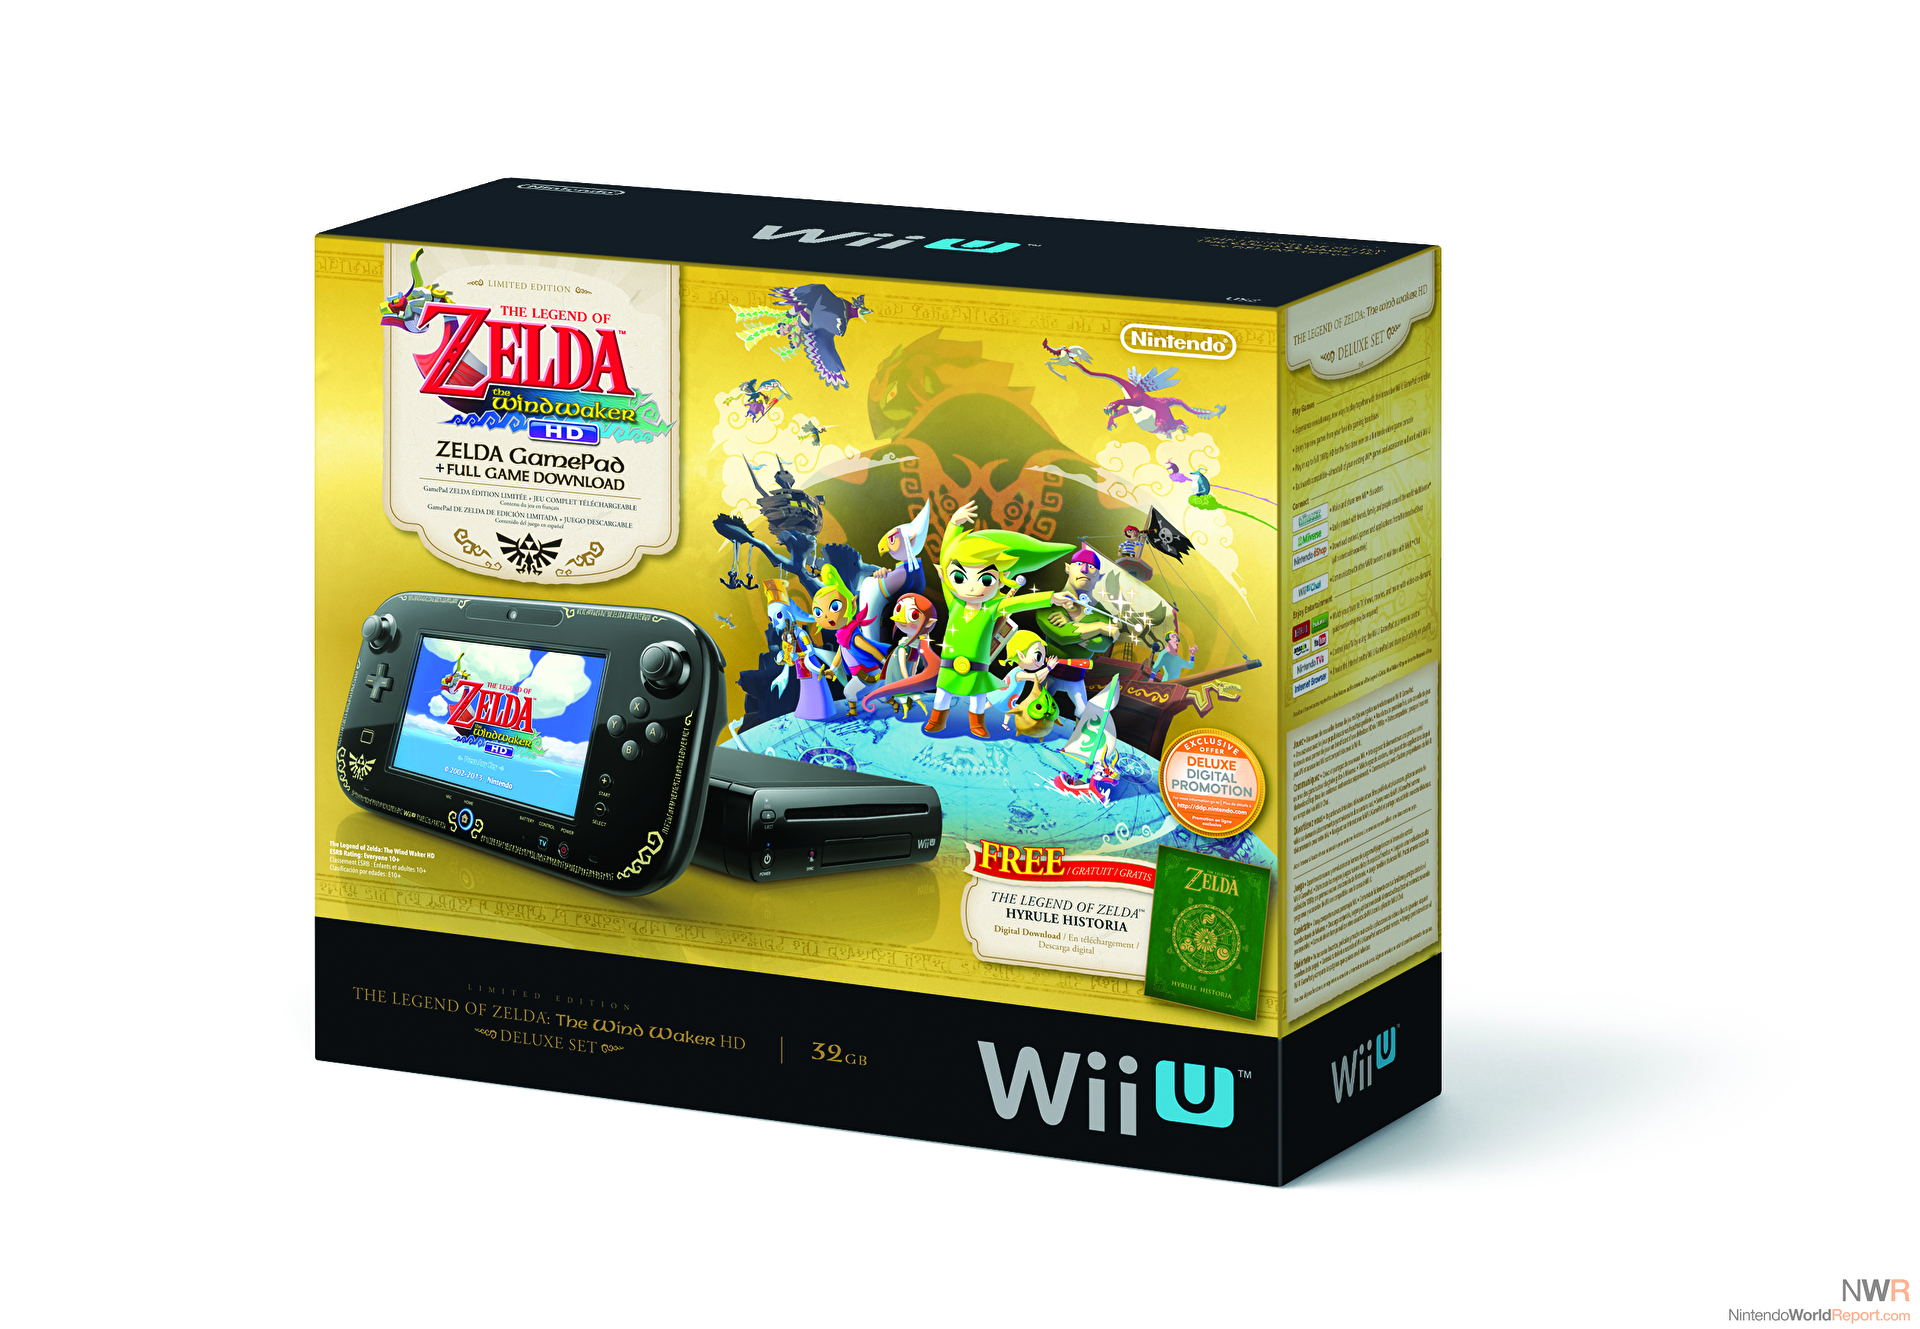 The Legend of Zelda - Kaze no Takuto / Wind Waker [Wii U]